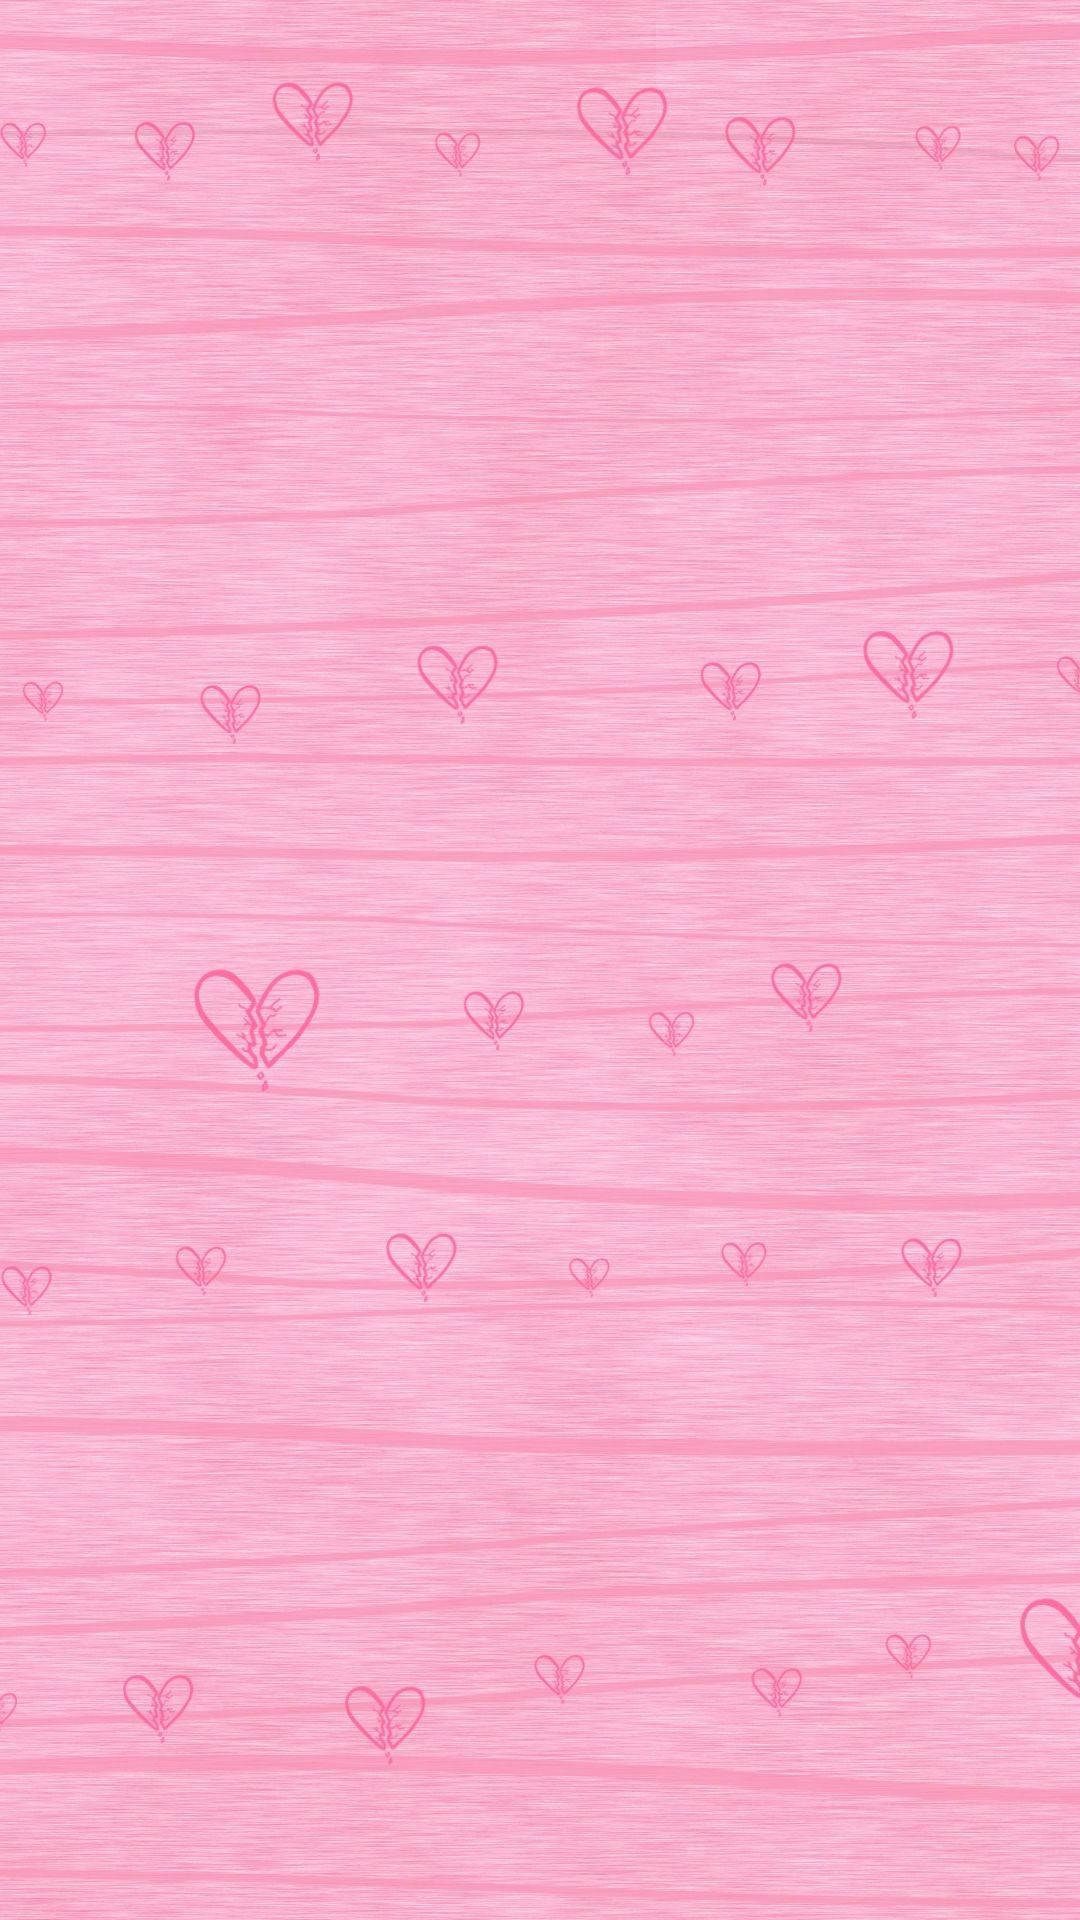 Cute Minimalist Love Heart Design Wallpaper